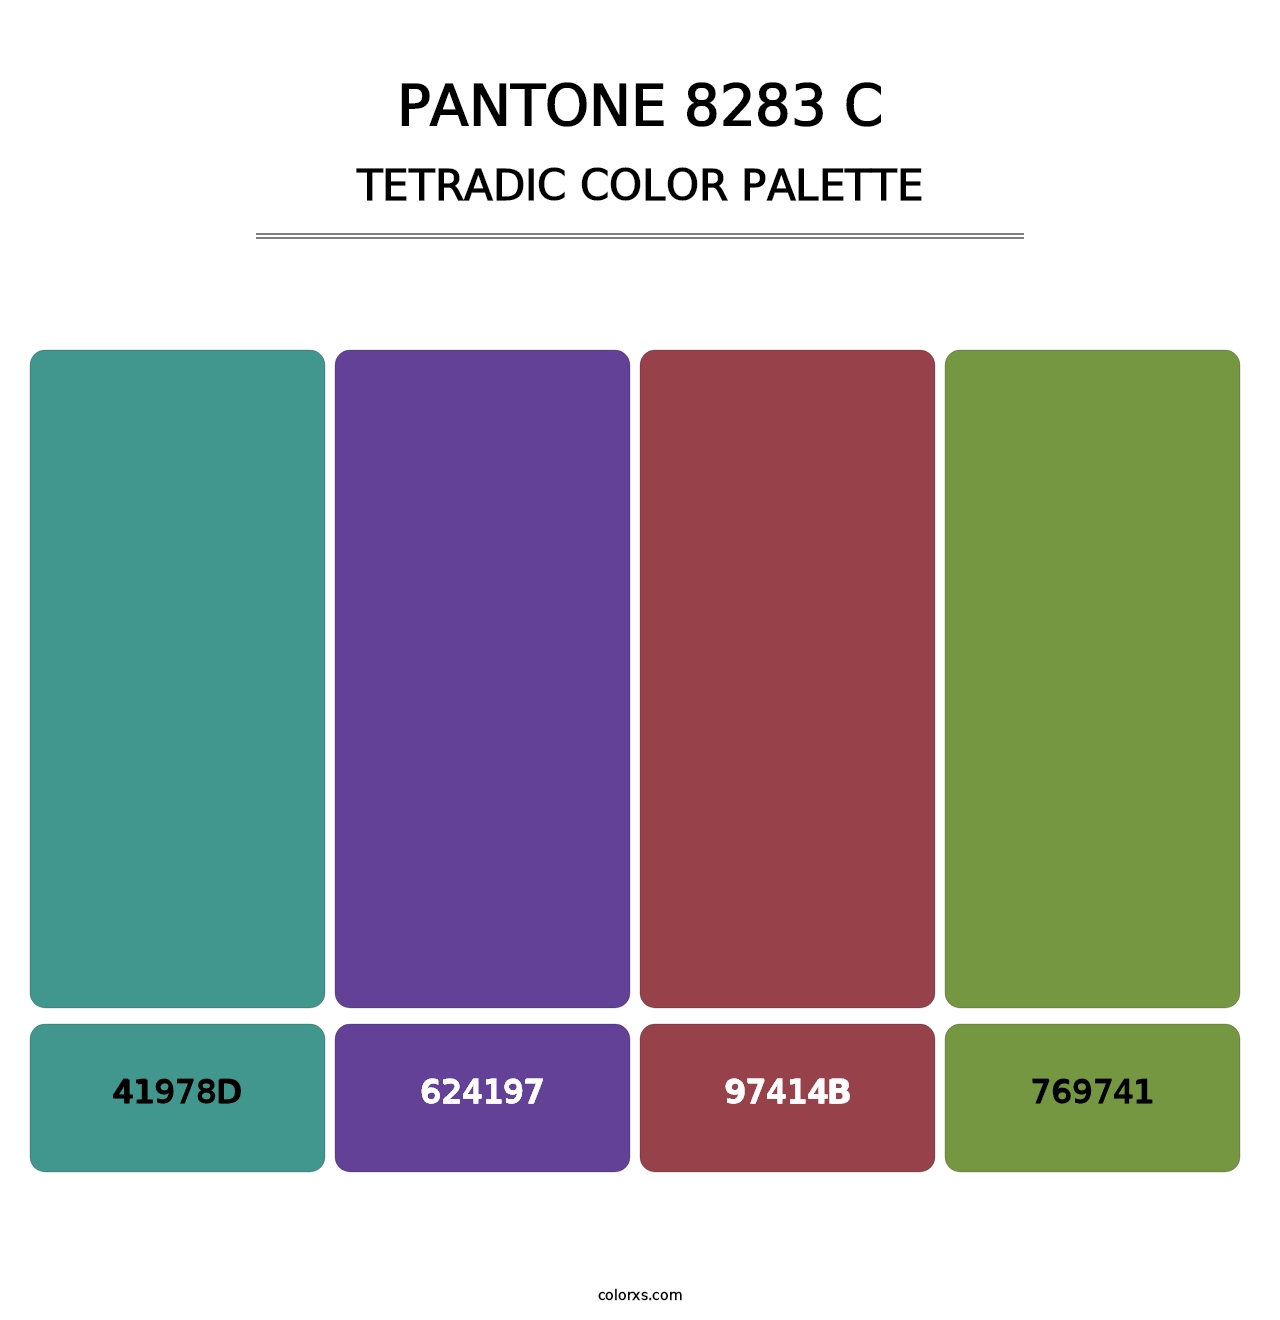 PANTONE 8283 C - Tetradic Color Palette